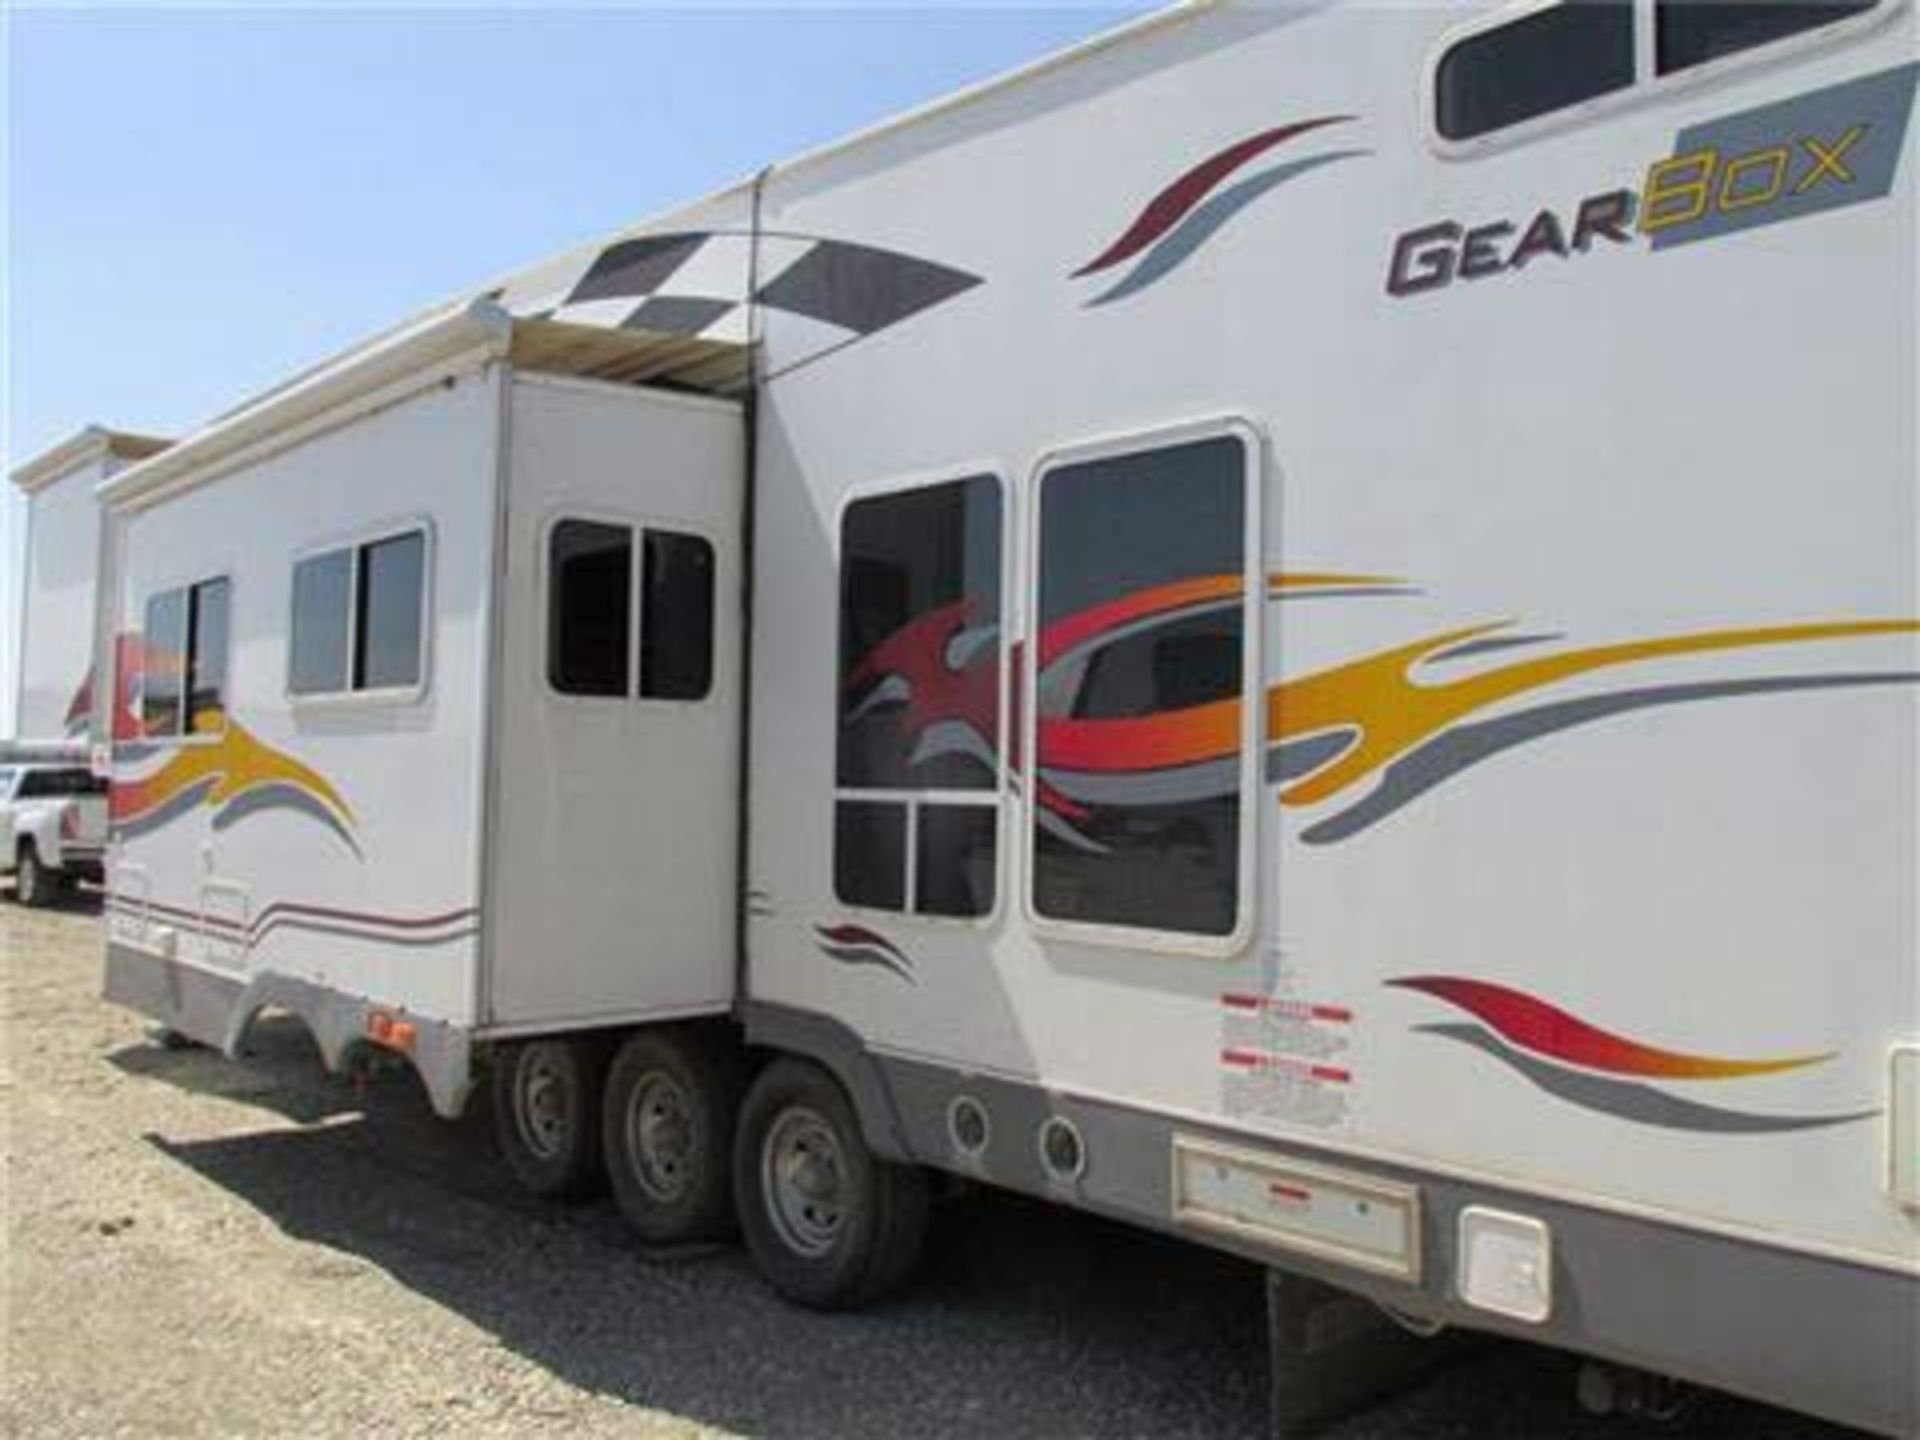 2007 Gear Box 395Fs 39 ft Tri/A 5th Wheel Travel Trailer - Image 3 of 18